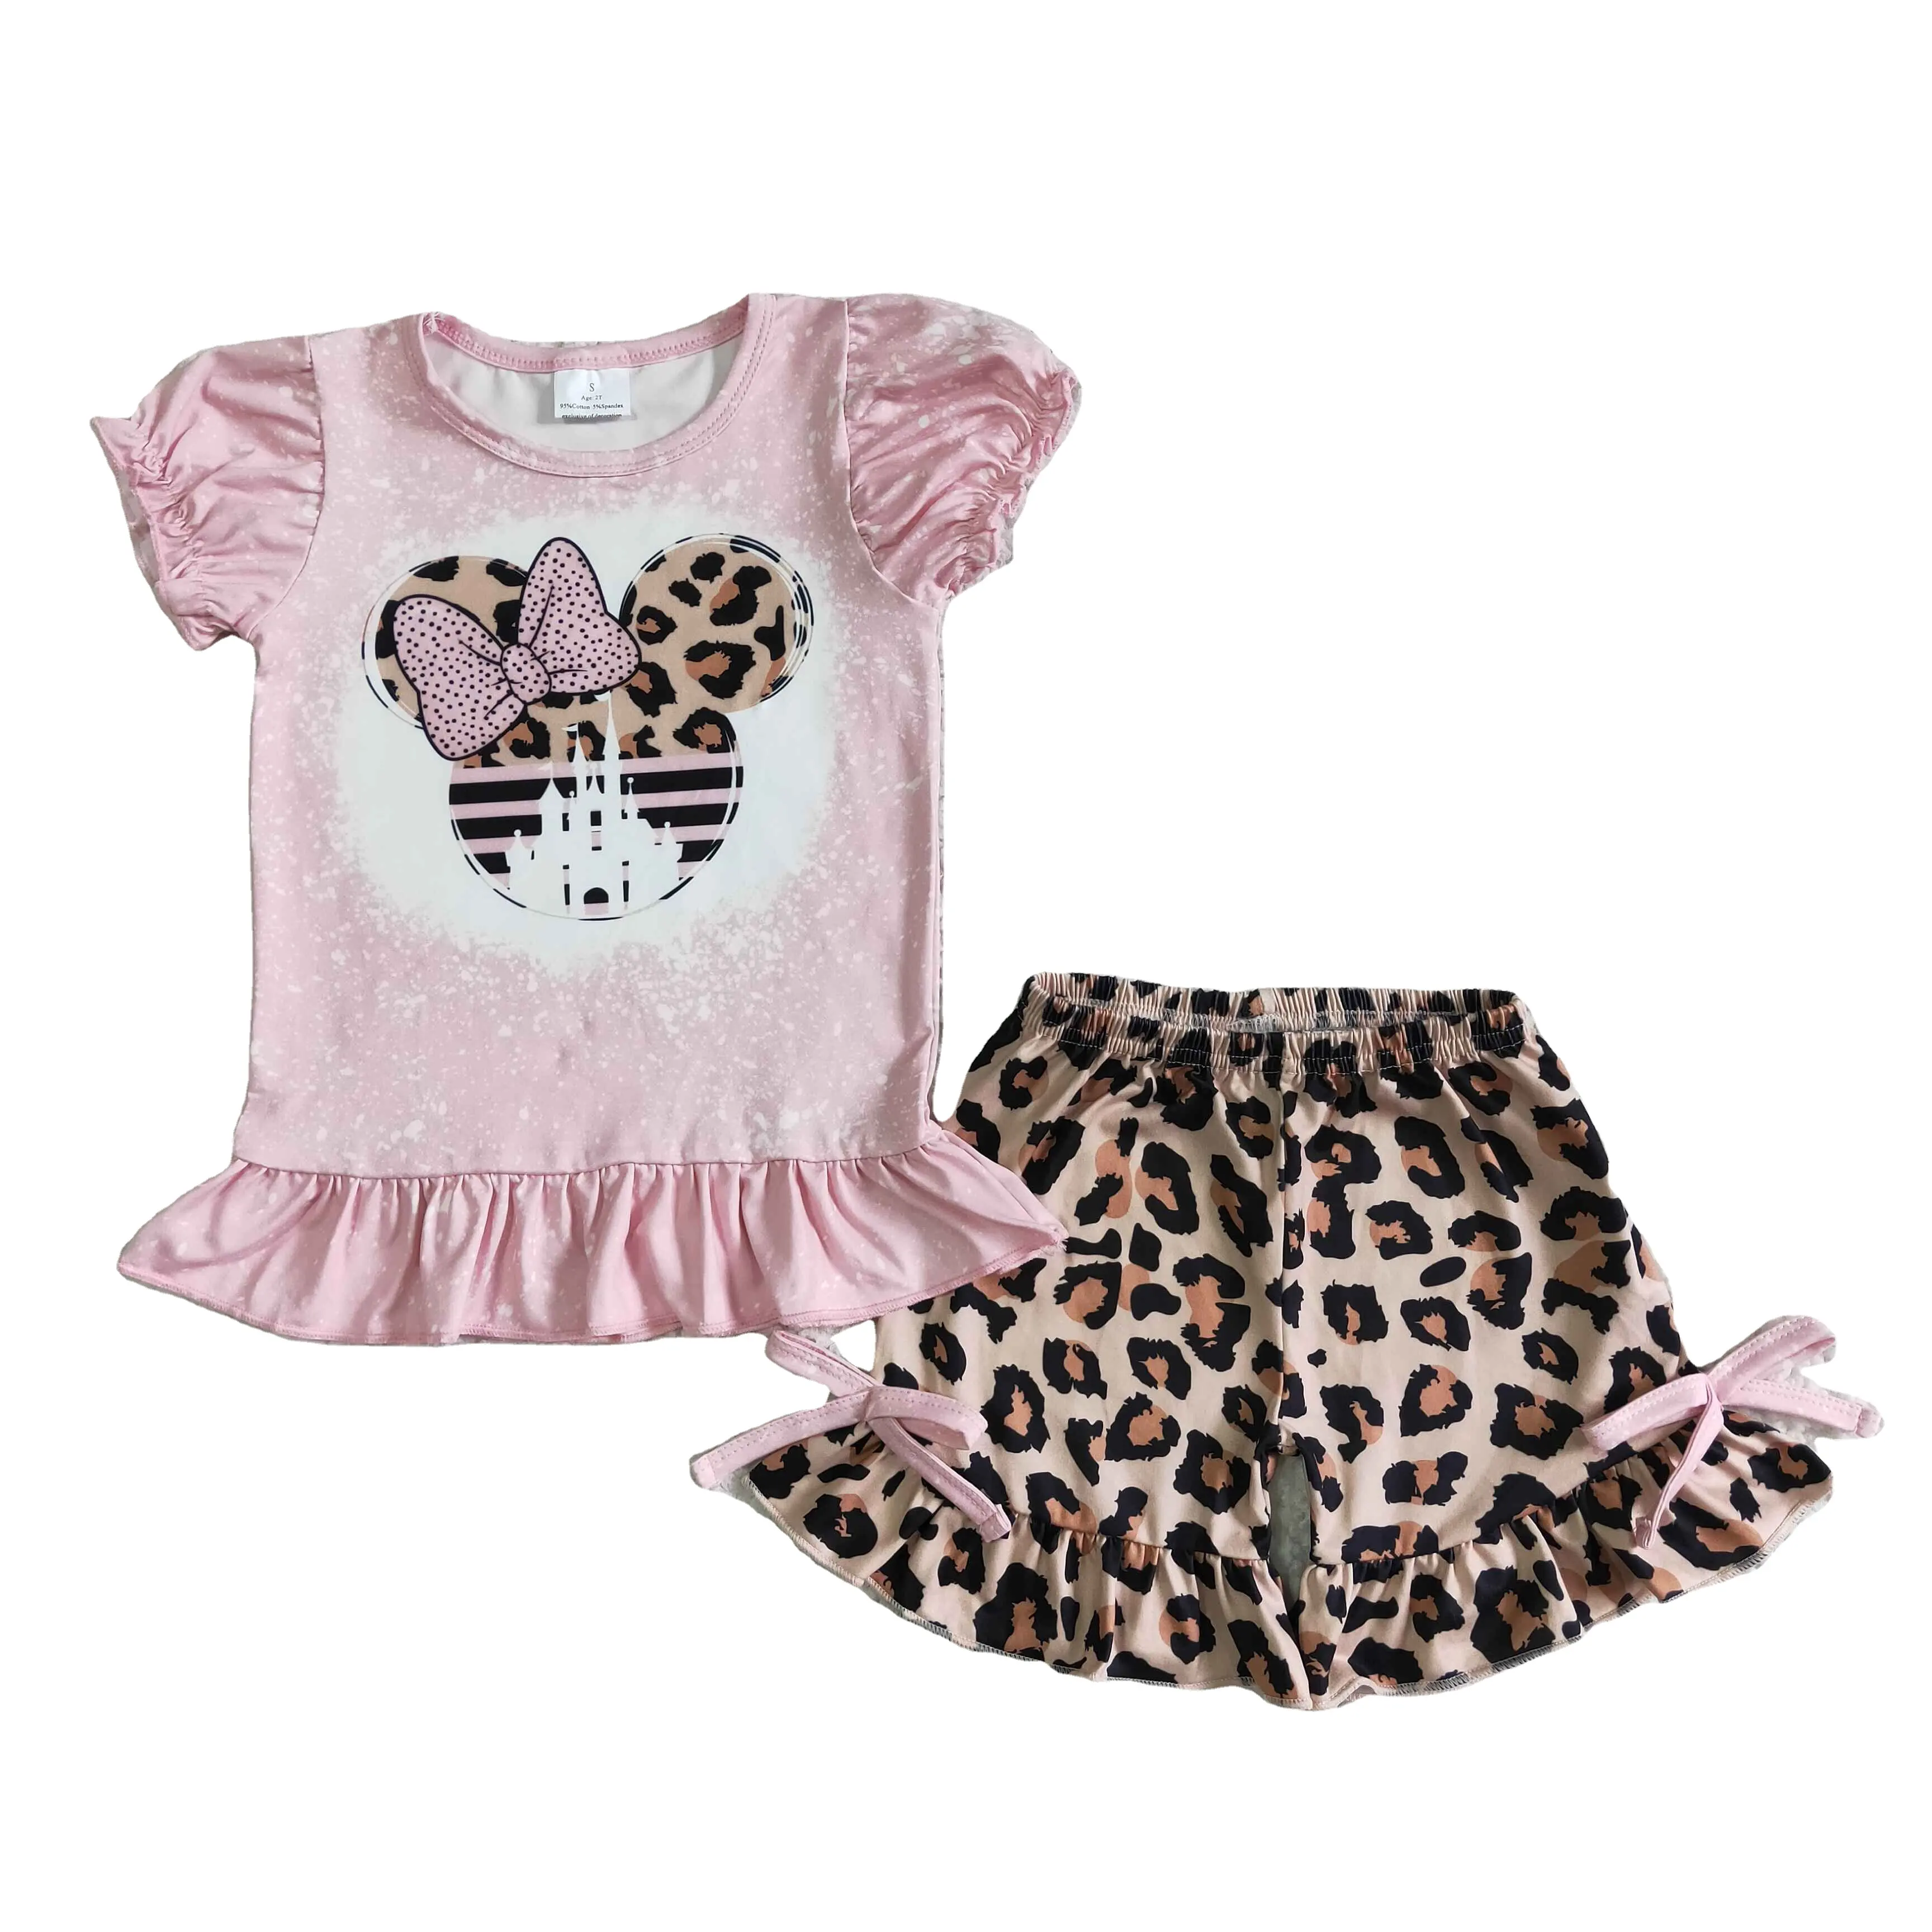 Cartoon mouse castle print leopard children clothing kids wear baby girls boutique sets two pieces T shirt shorts outfits